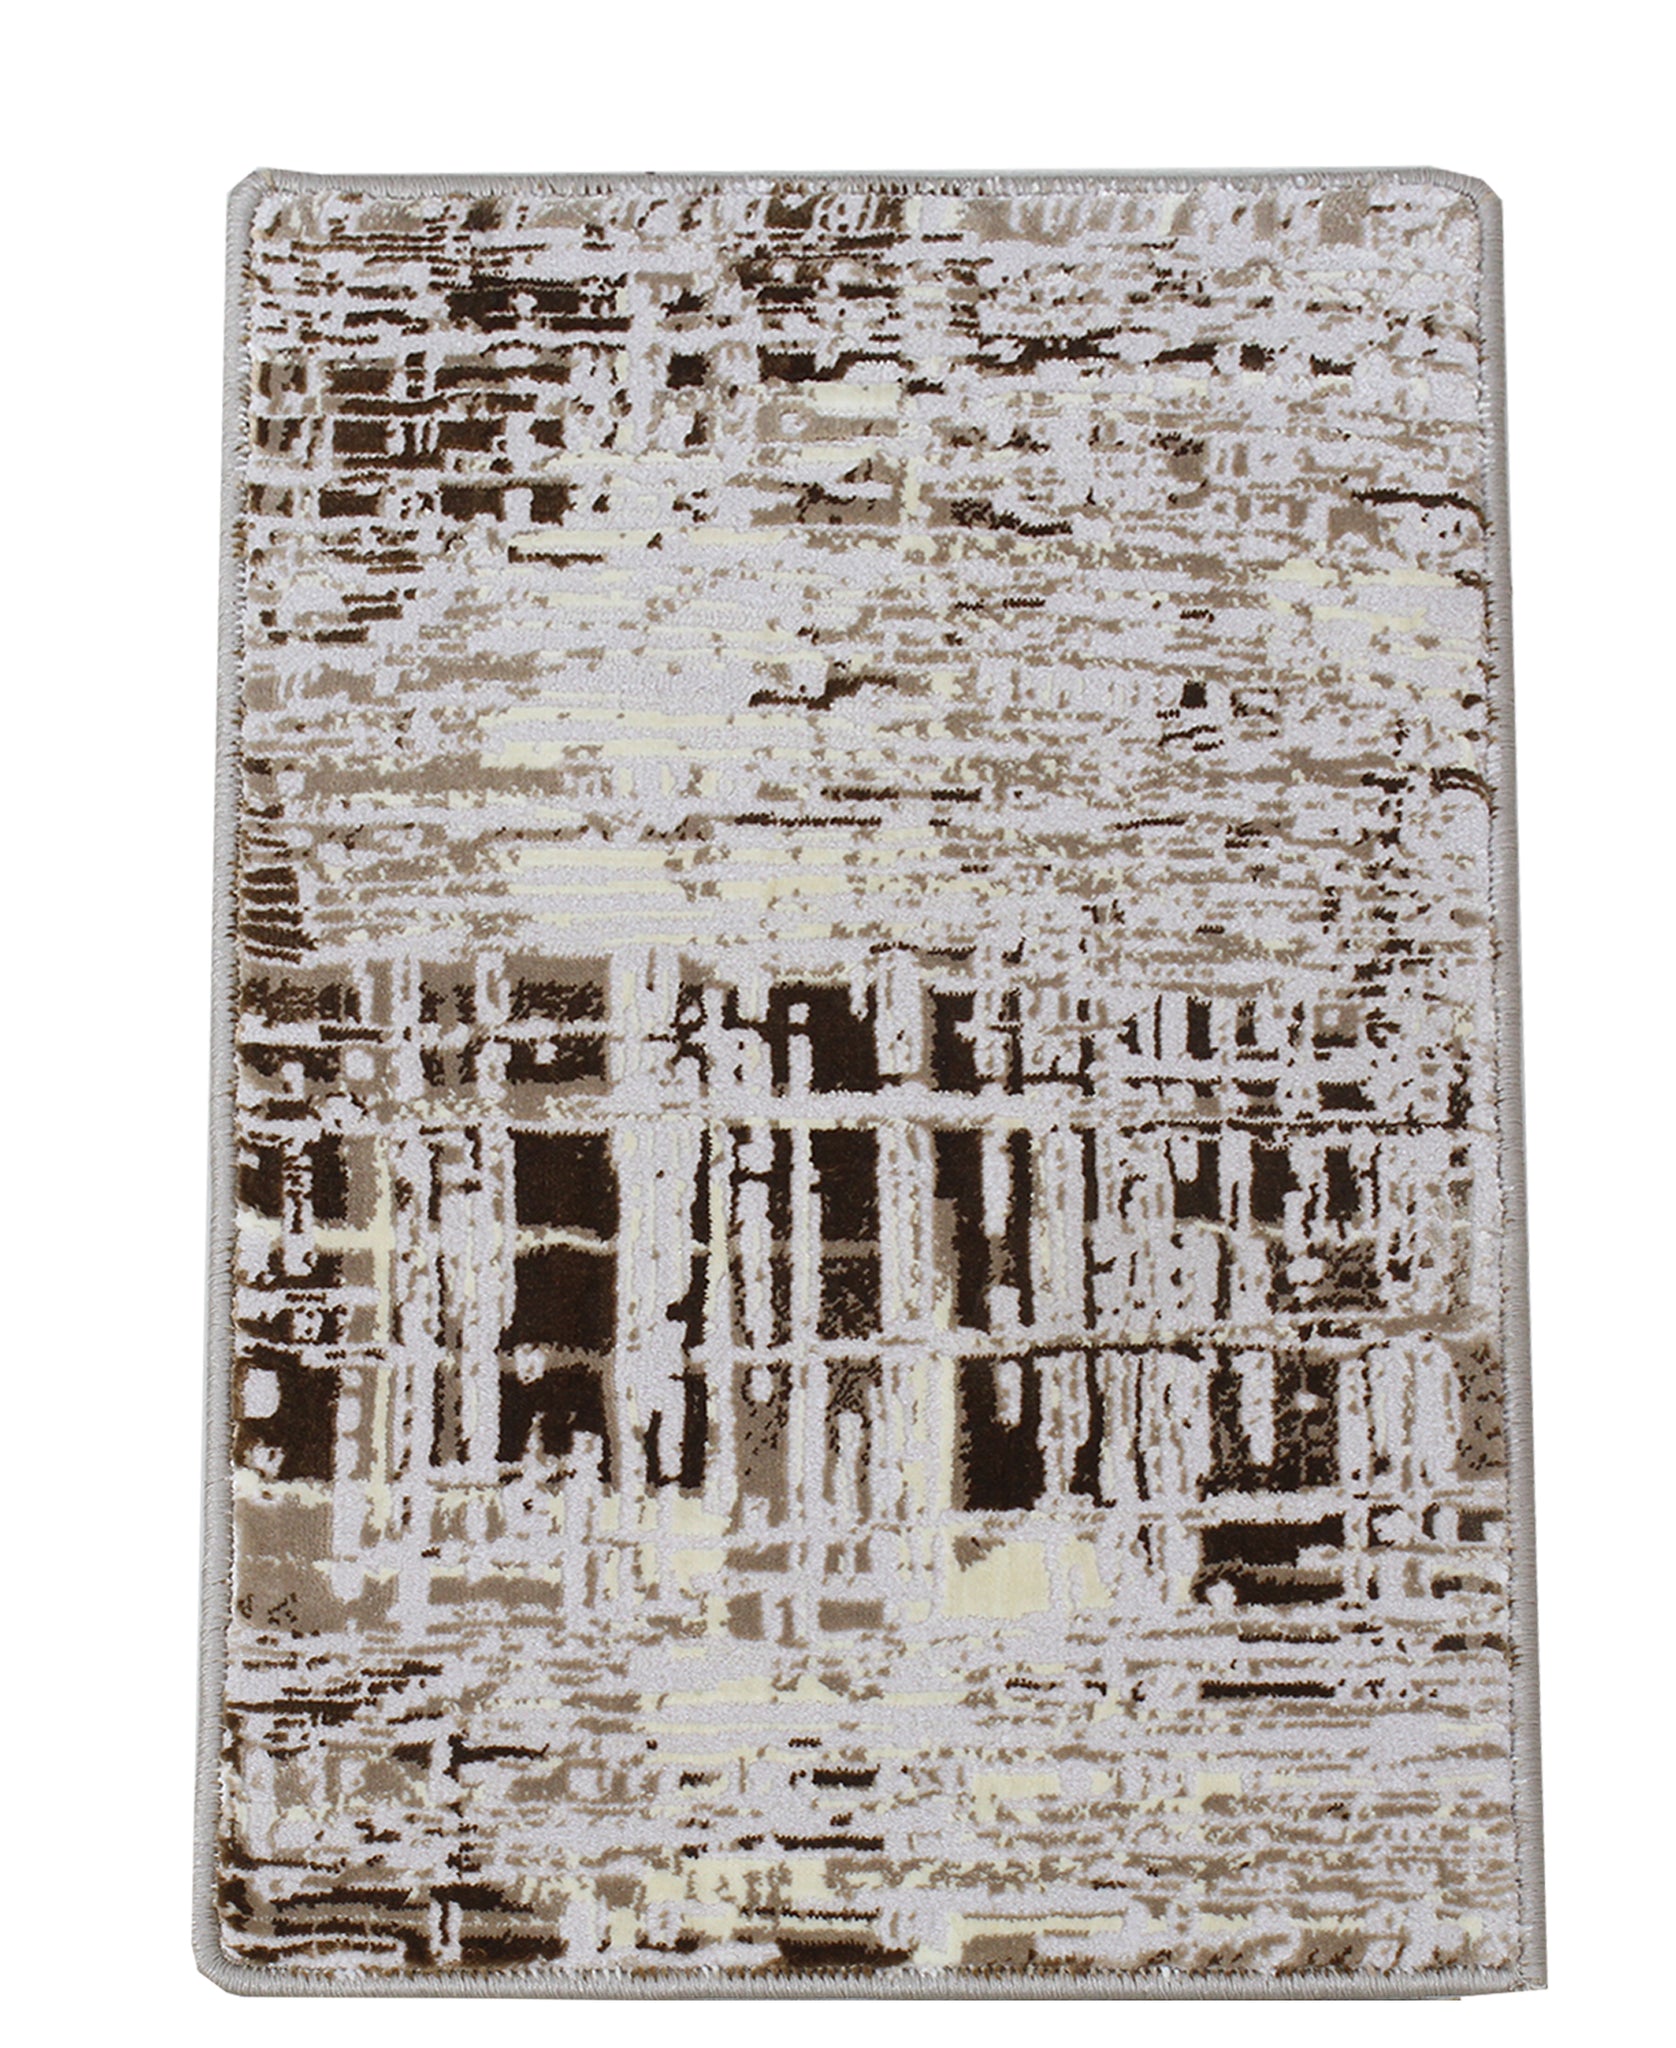 Damascus Drizzle Carpet 500mm x 800mm - Beige, White & Brown